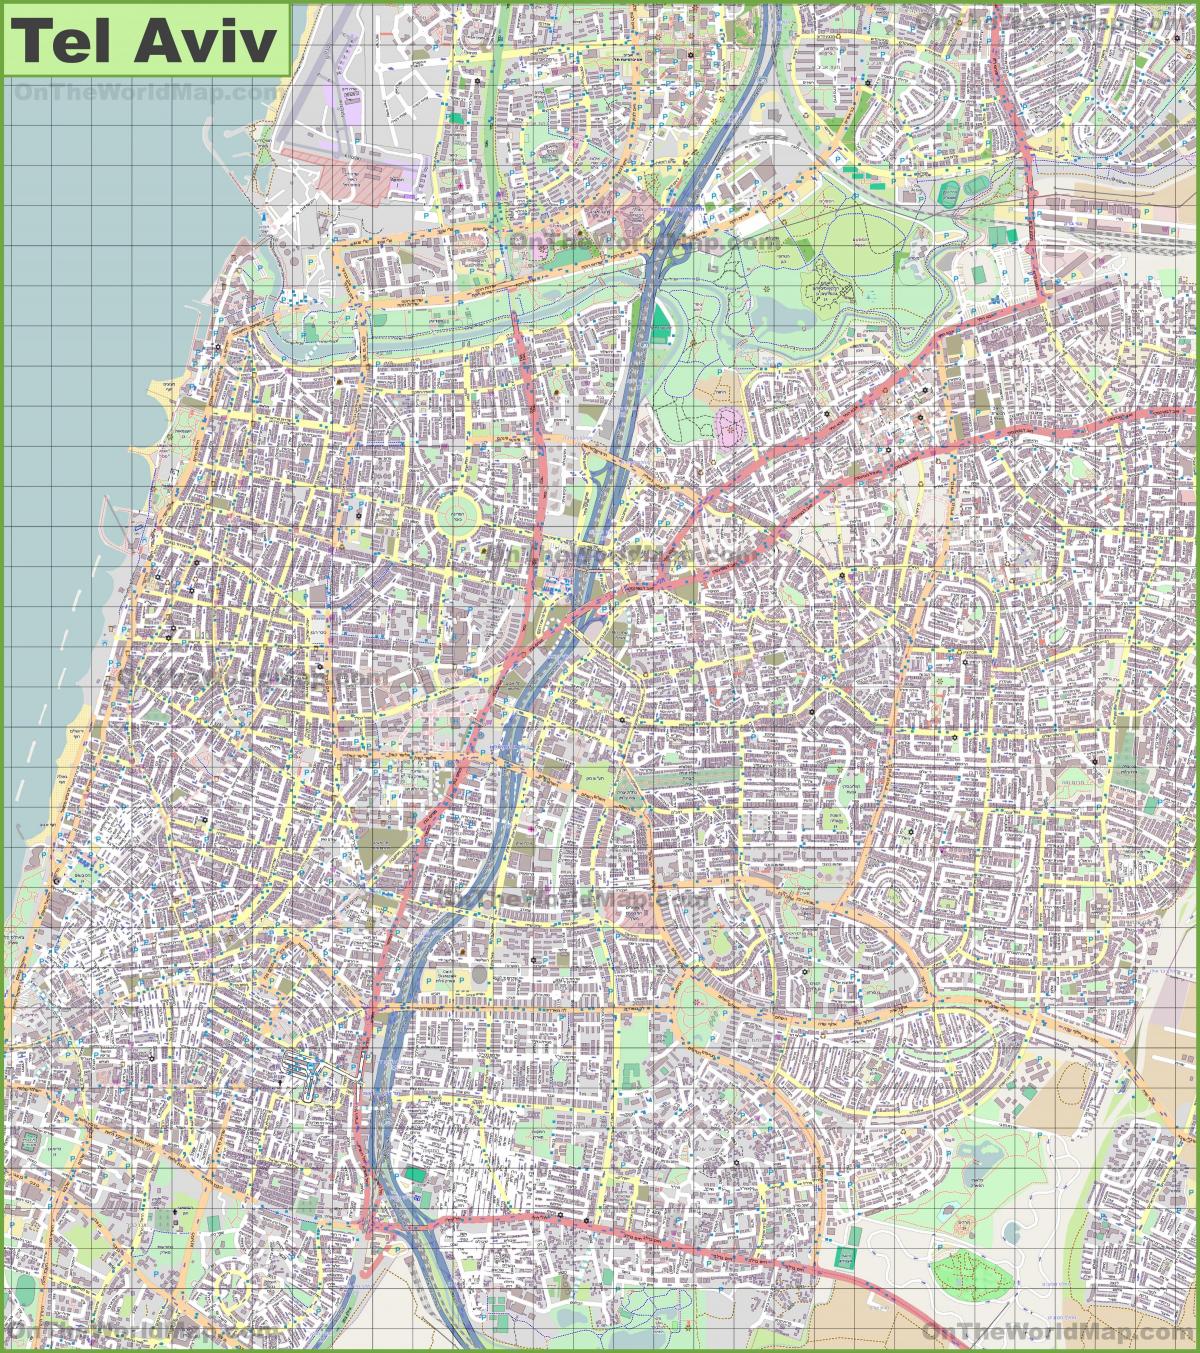 Plan des rues de Tel Aviv